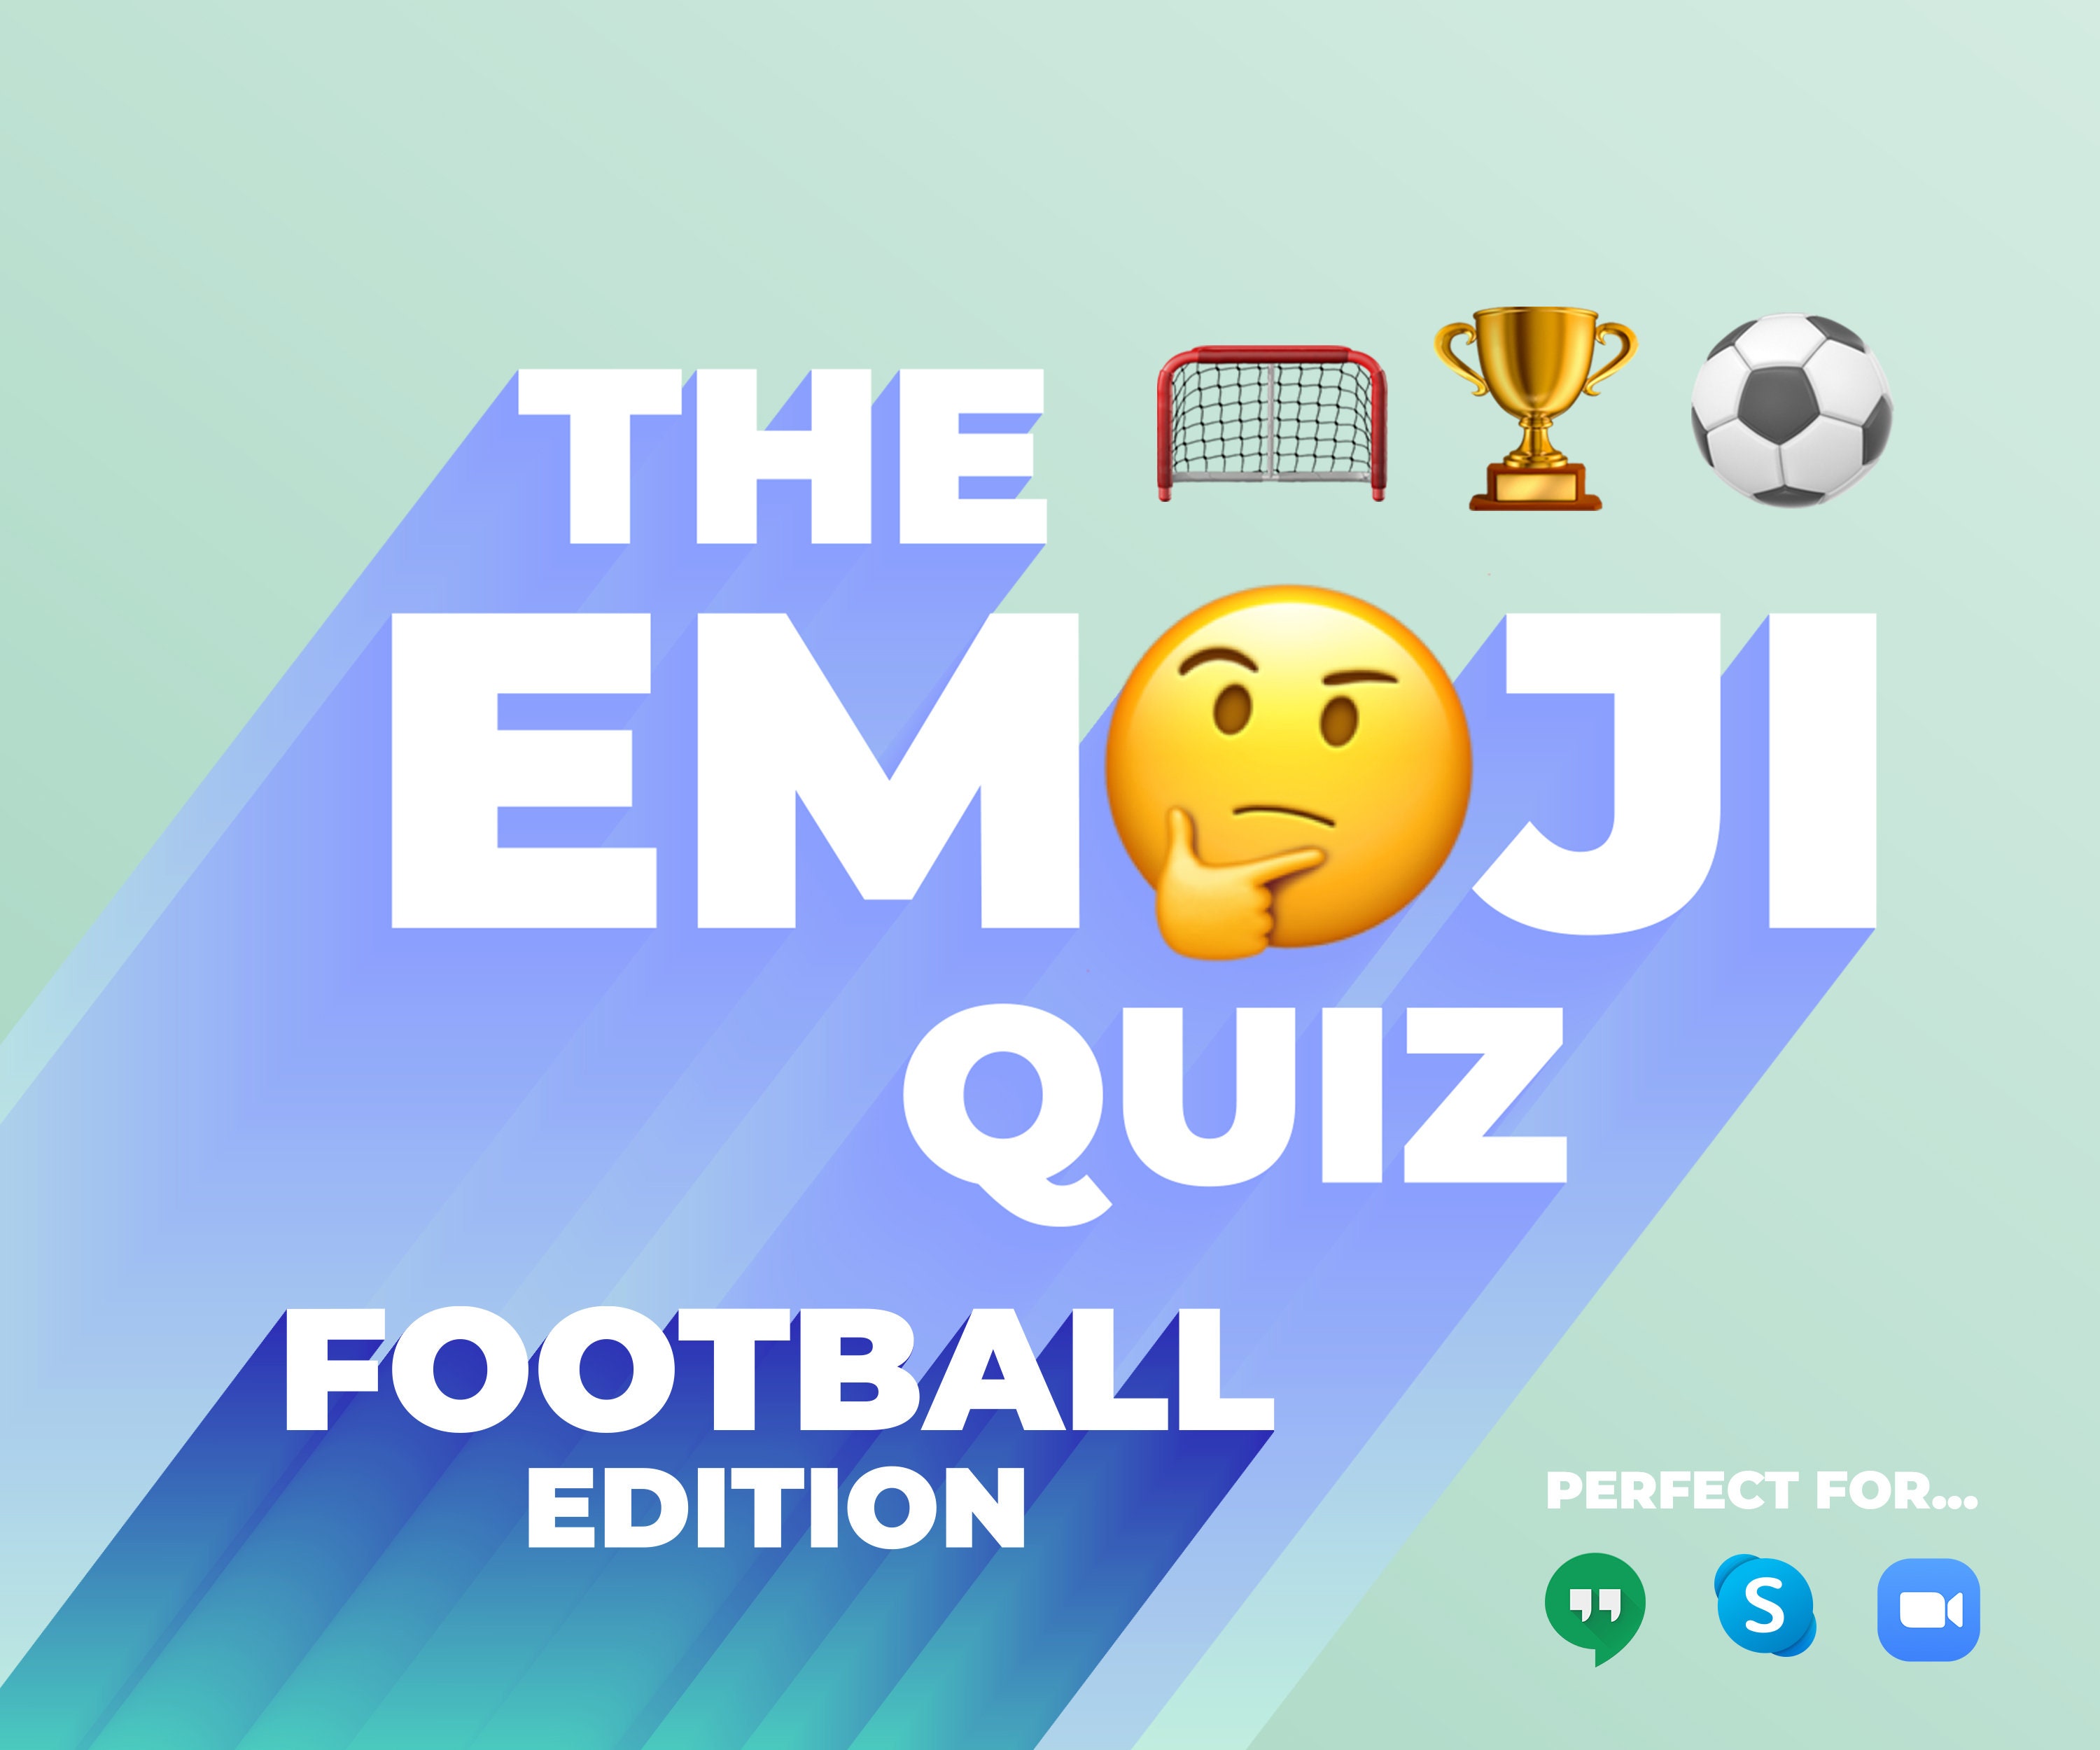 Emoji Quiz: Name that football player!, Football News